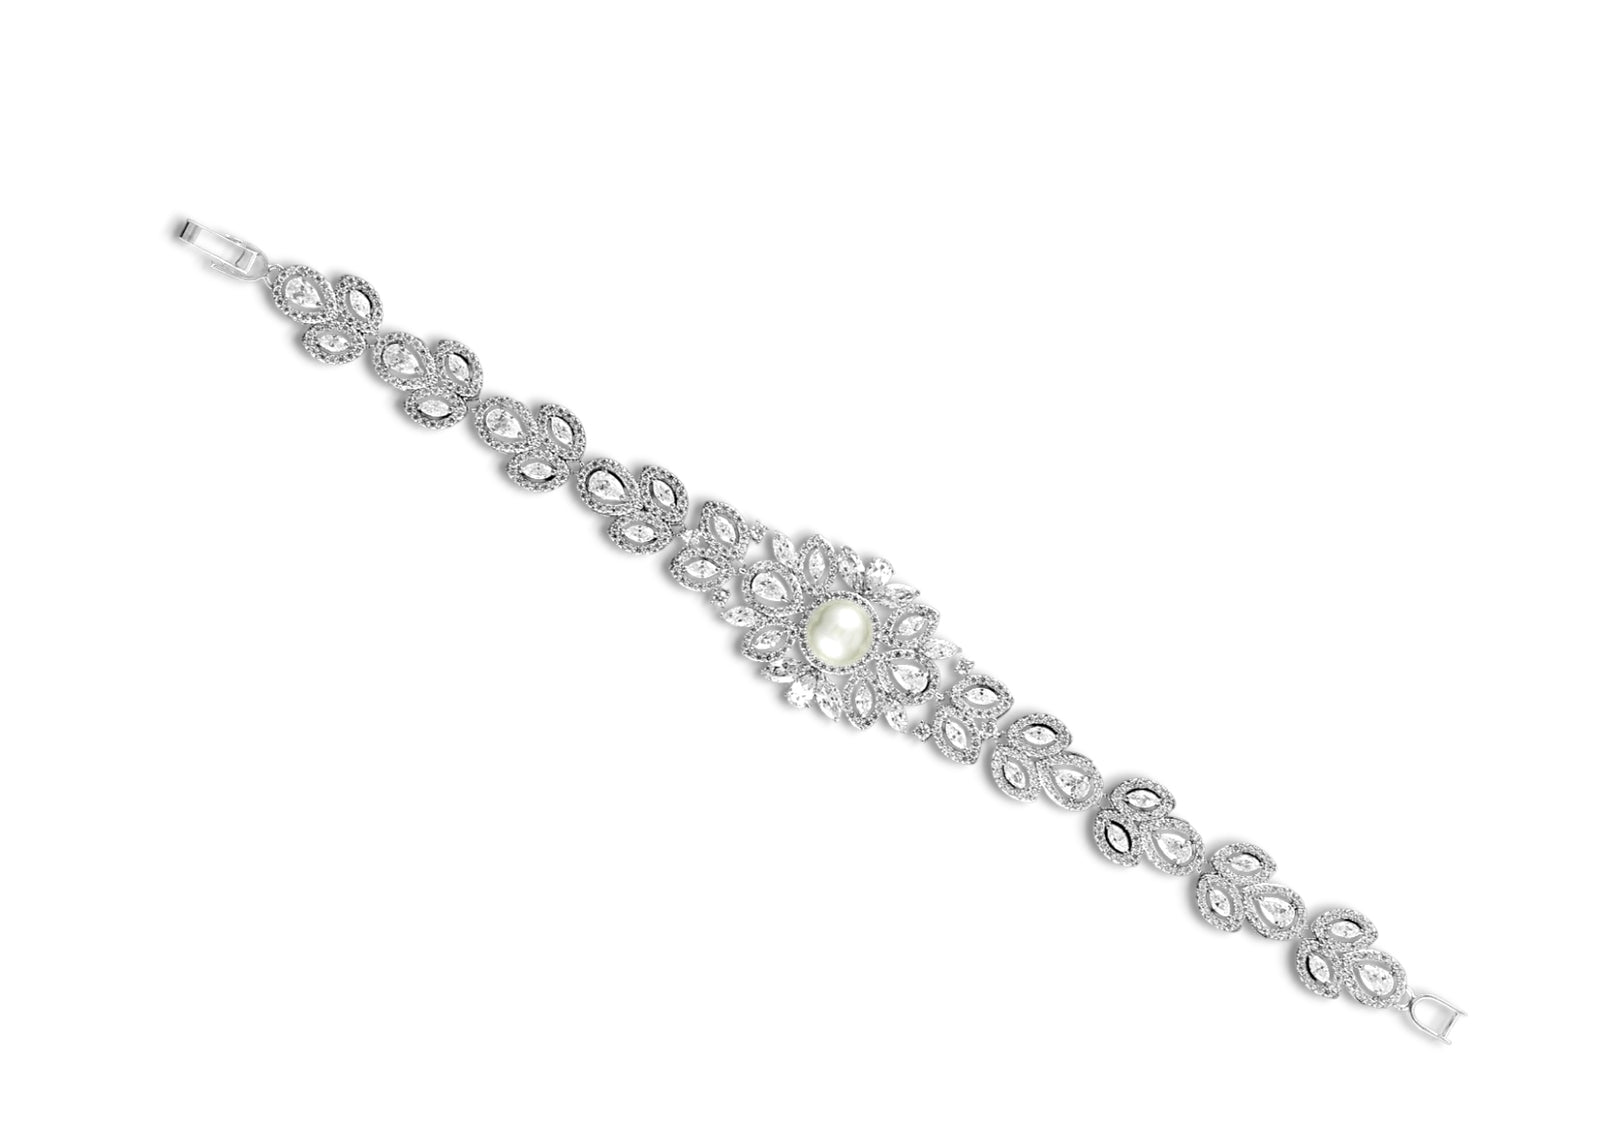 Vintage Inspired CZ Pearl Wedding Bracelet